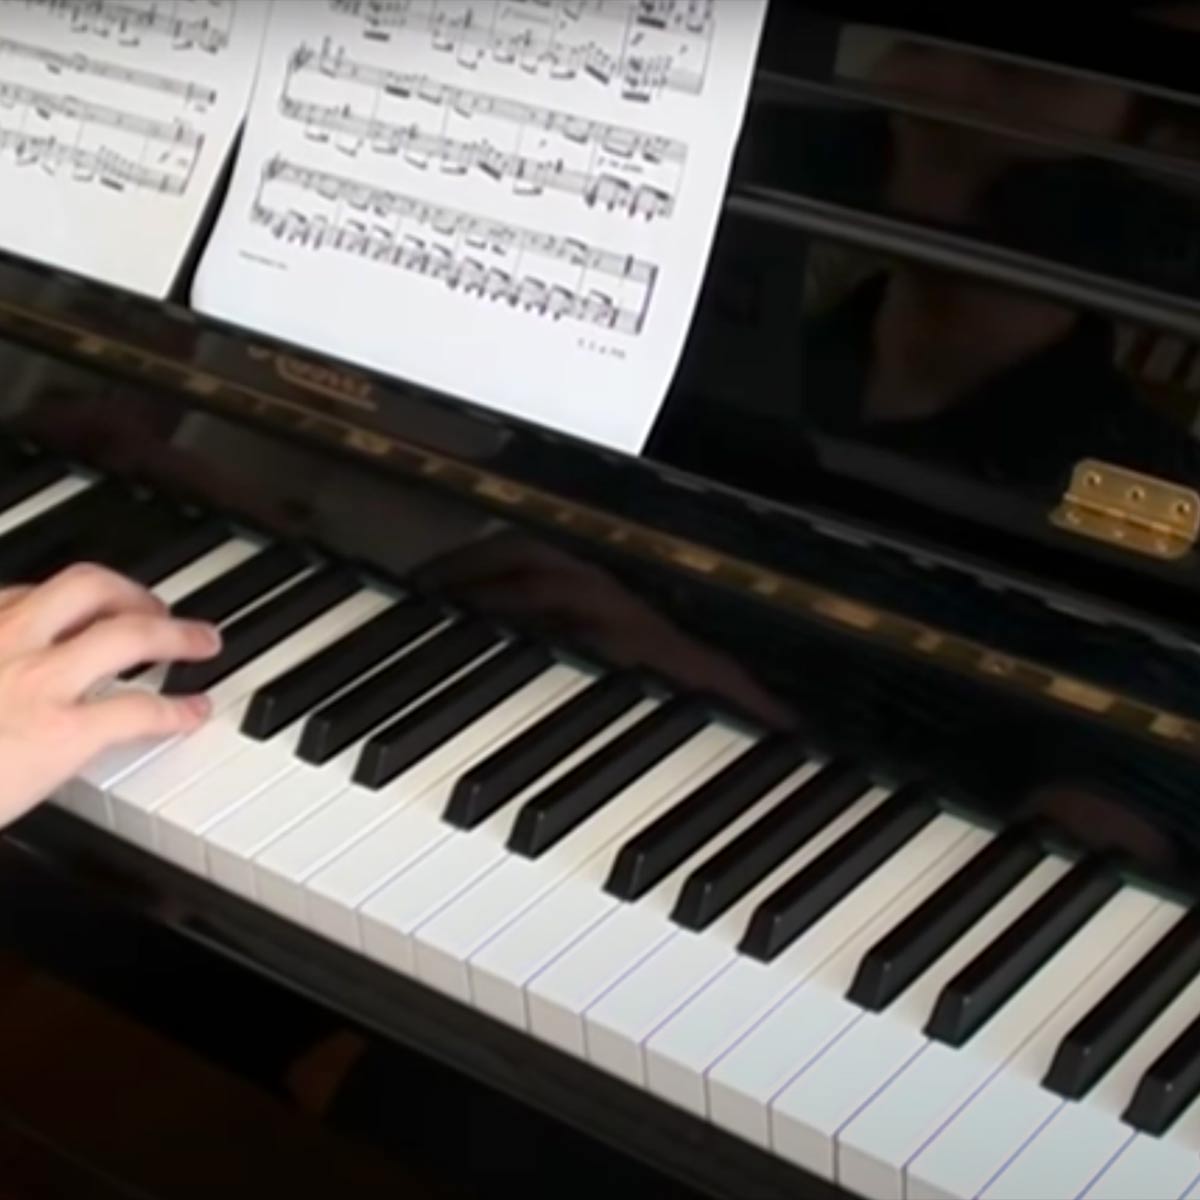 Play The Flea Waltz Piano Music Sheet On Virtual Piano - youtube videos roblox piano keyboard